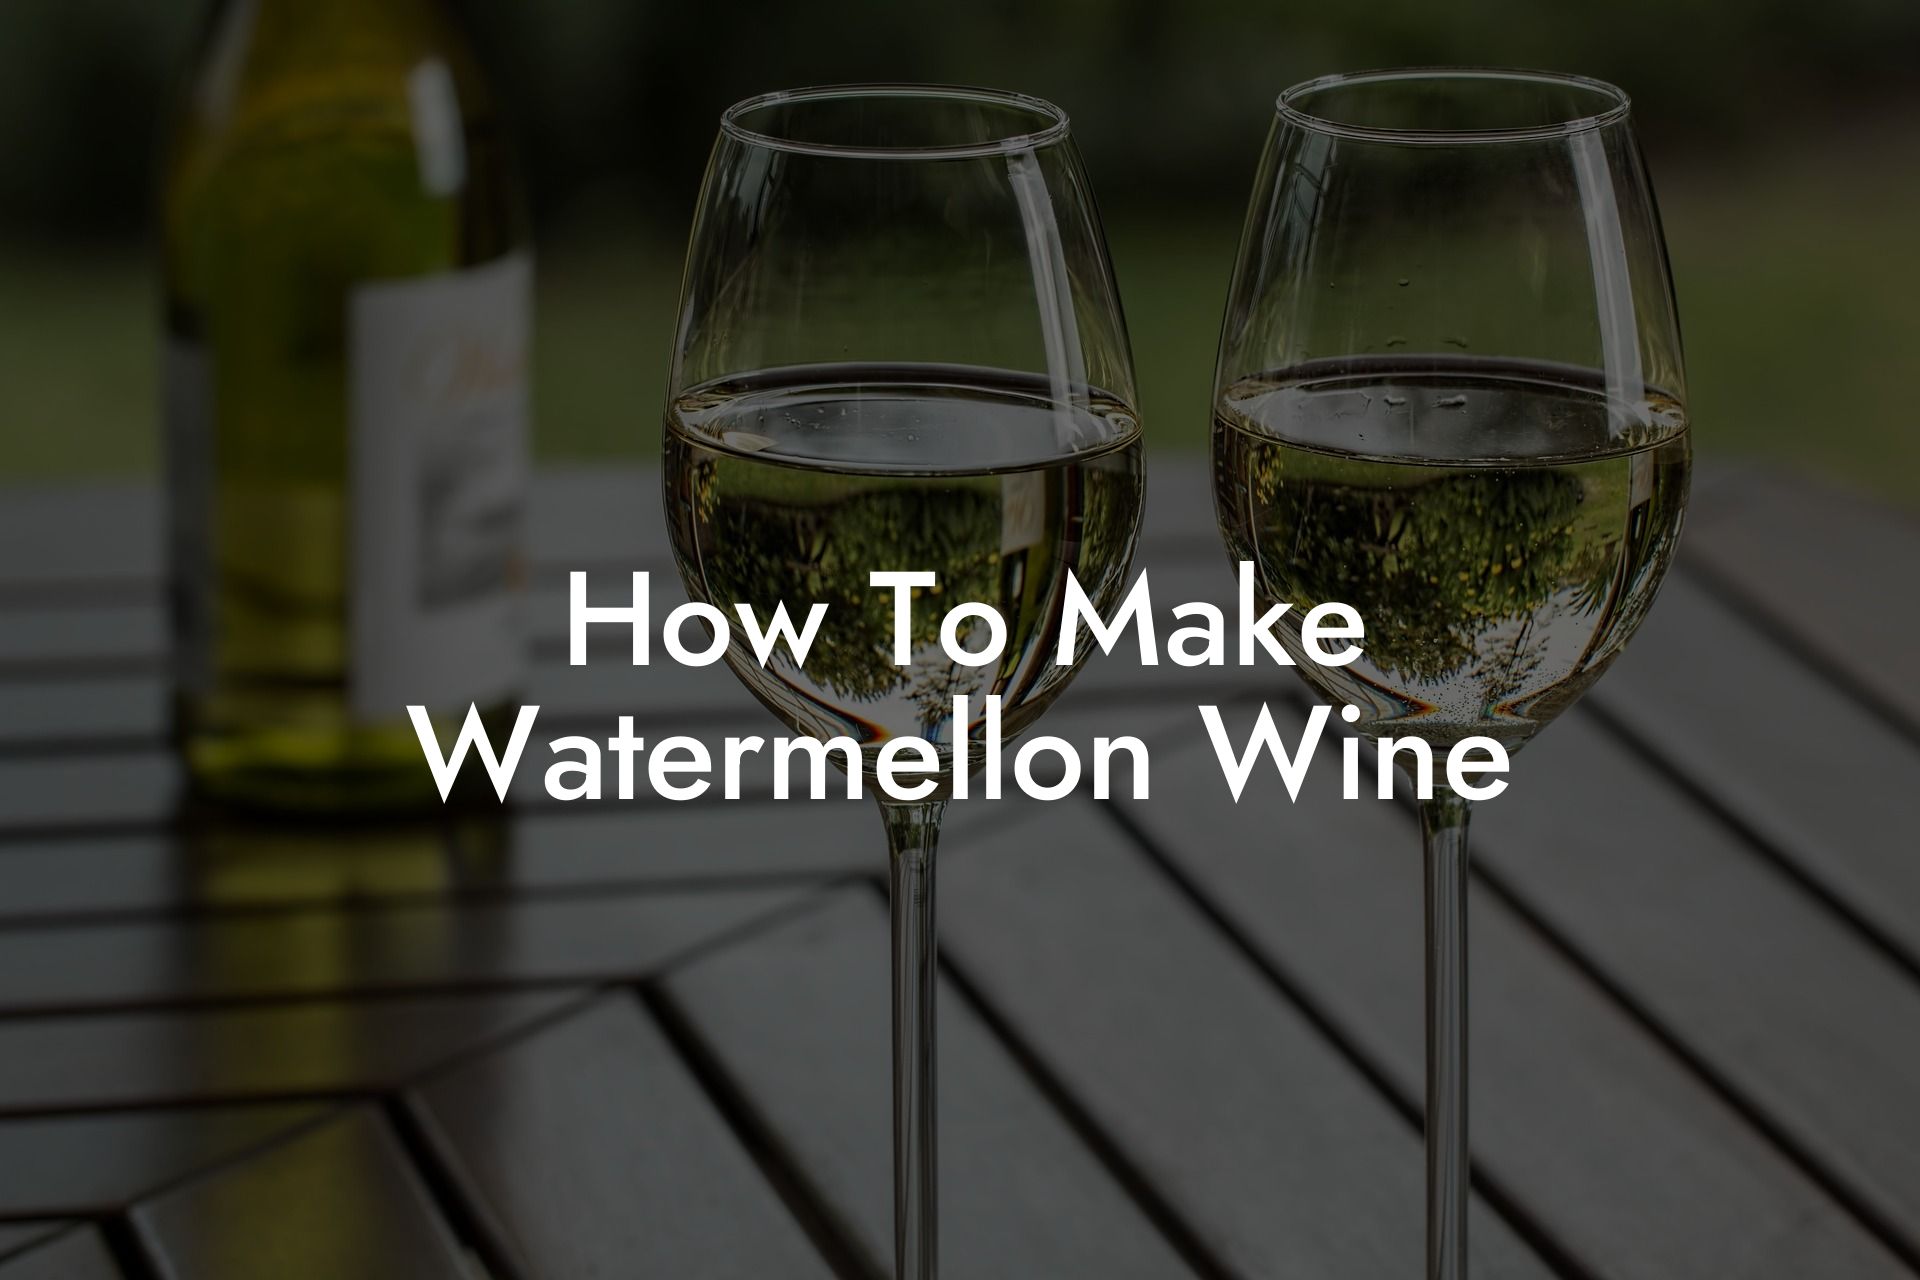 How To Make Watermellon Wine